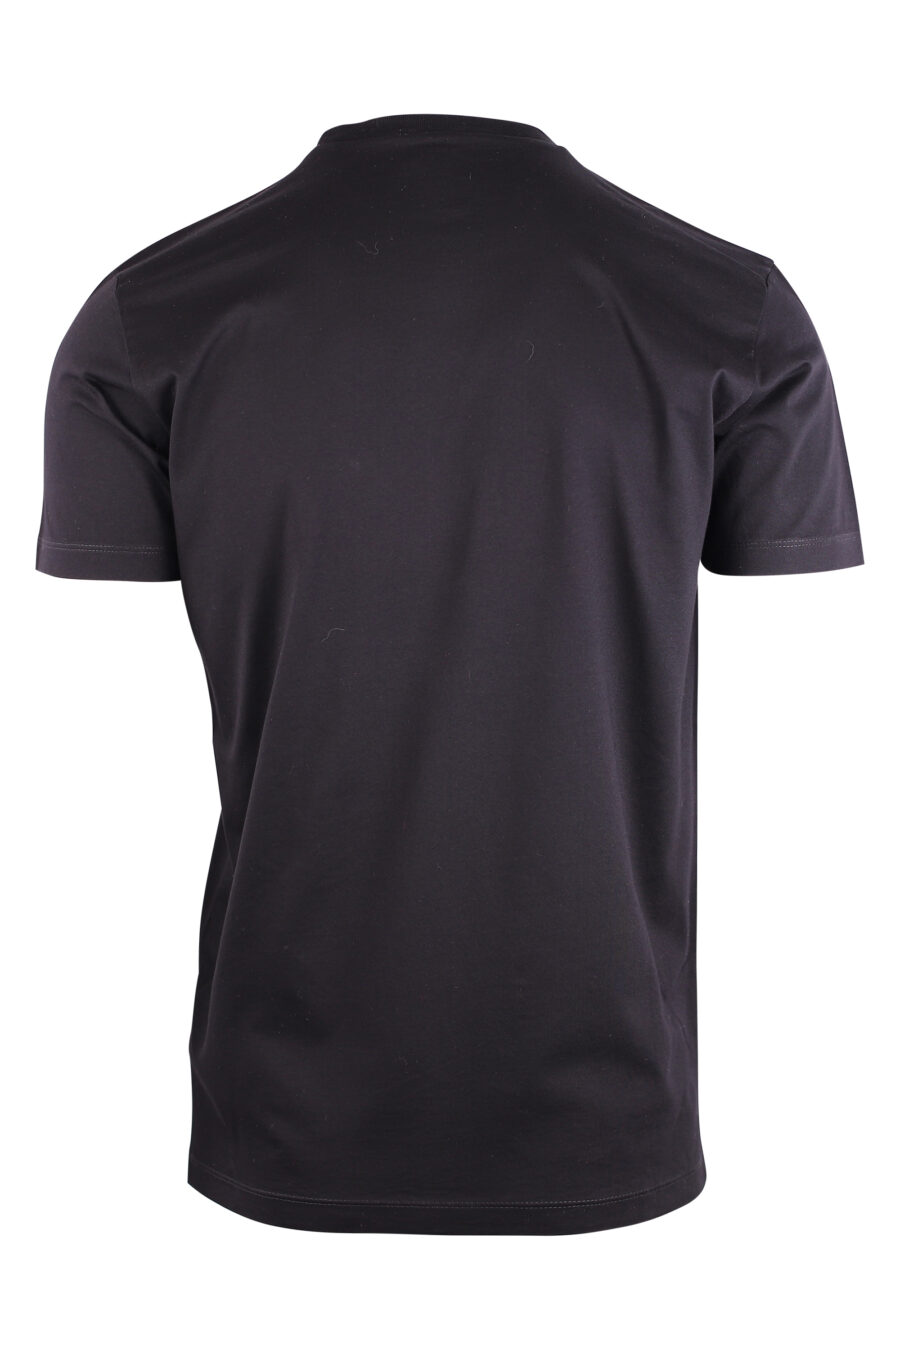 T-shirt noir avec logo "ibra" monochrome - IMG 3110